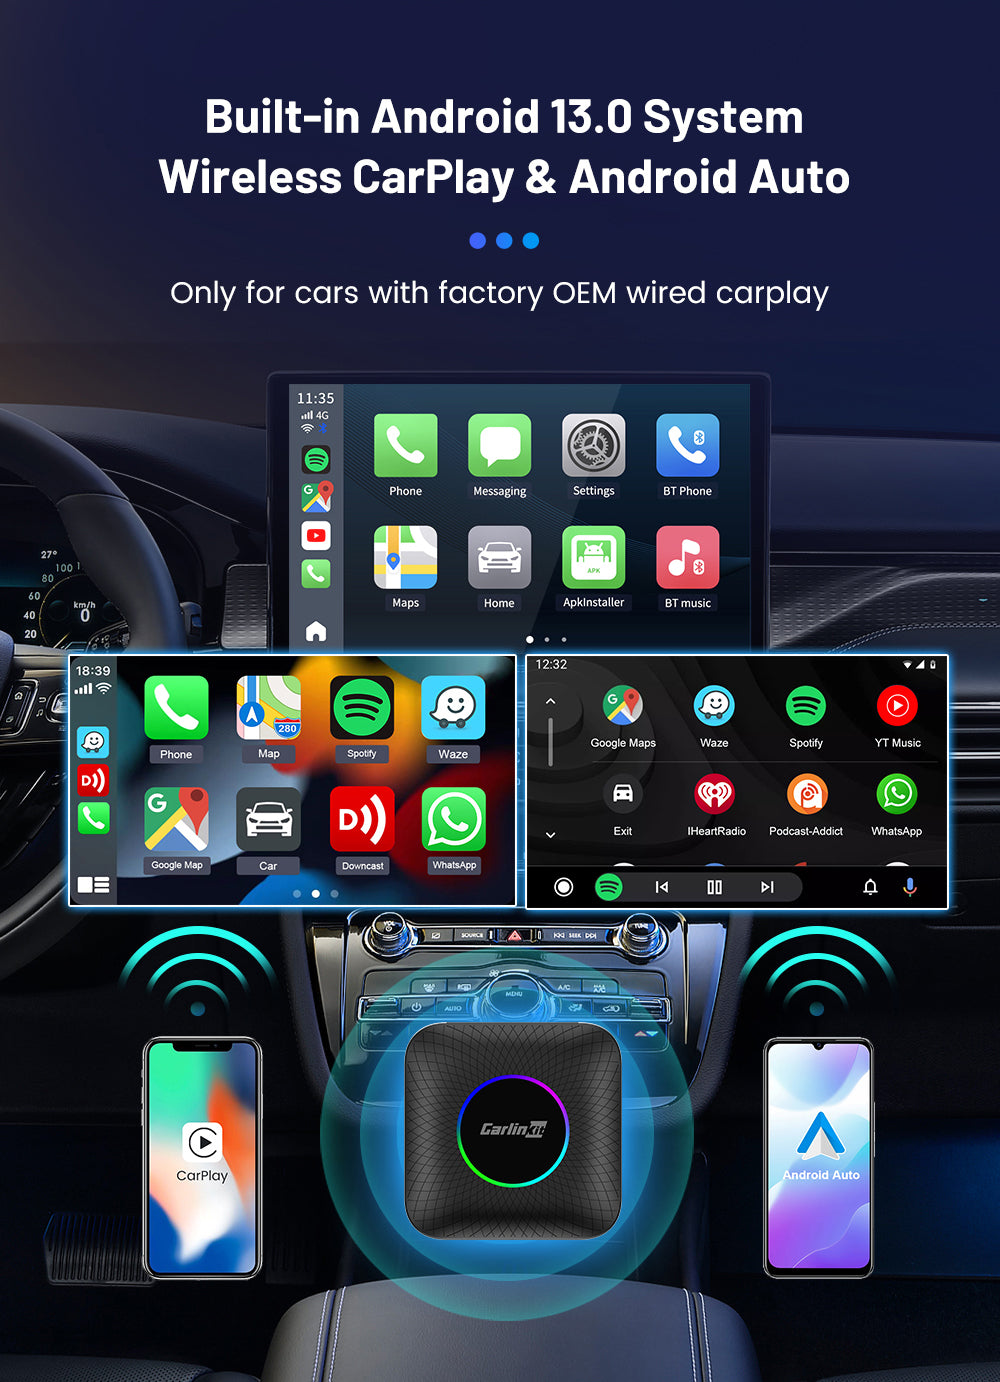 El adaptador Carplay inalámbrico Carlinkit 5.0 (2air) hace que CarPlay –  AutoKit CarPlay Store